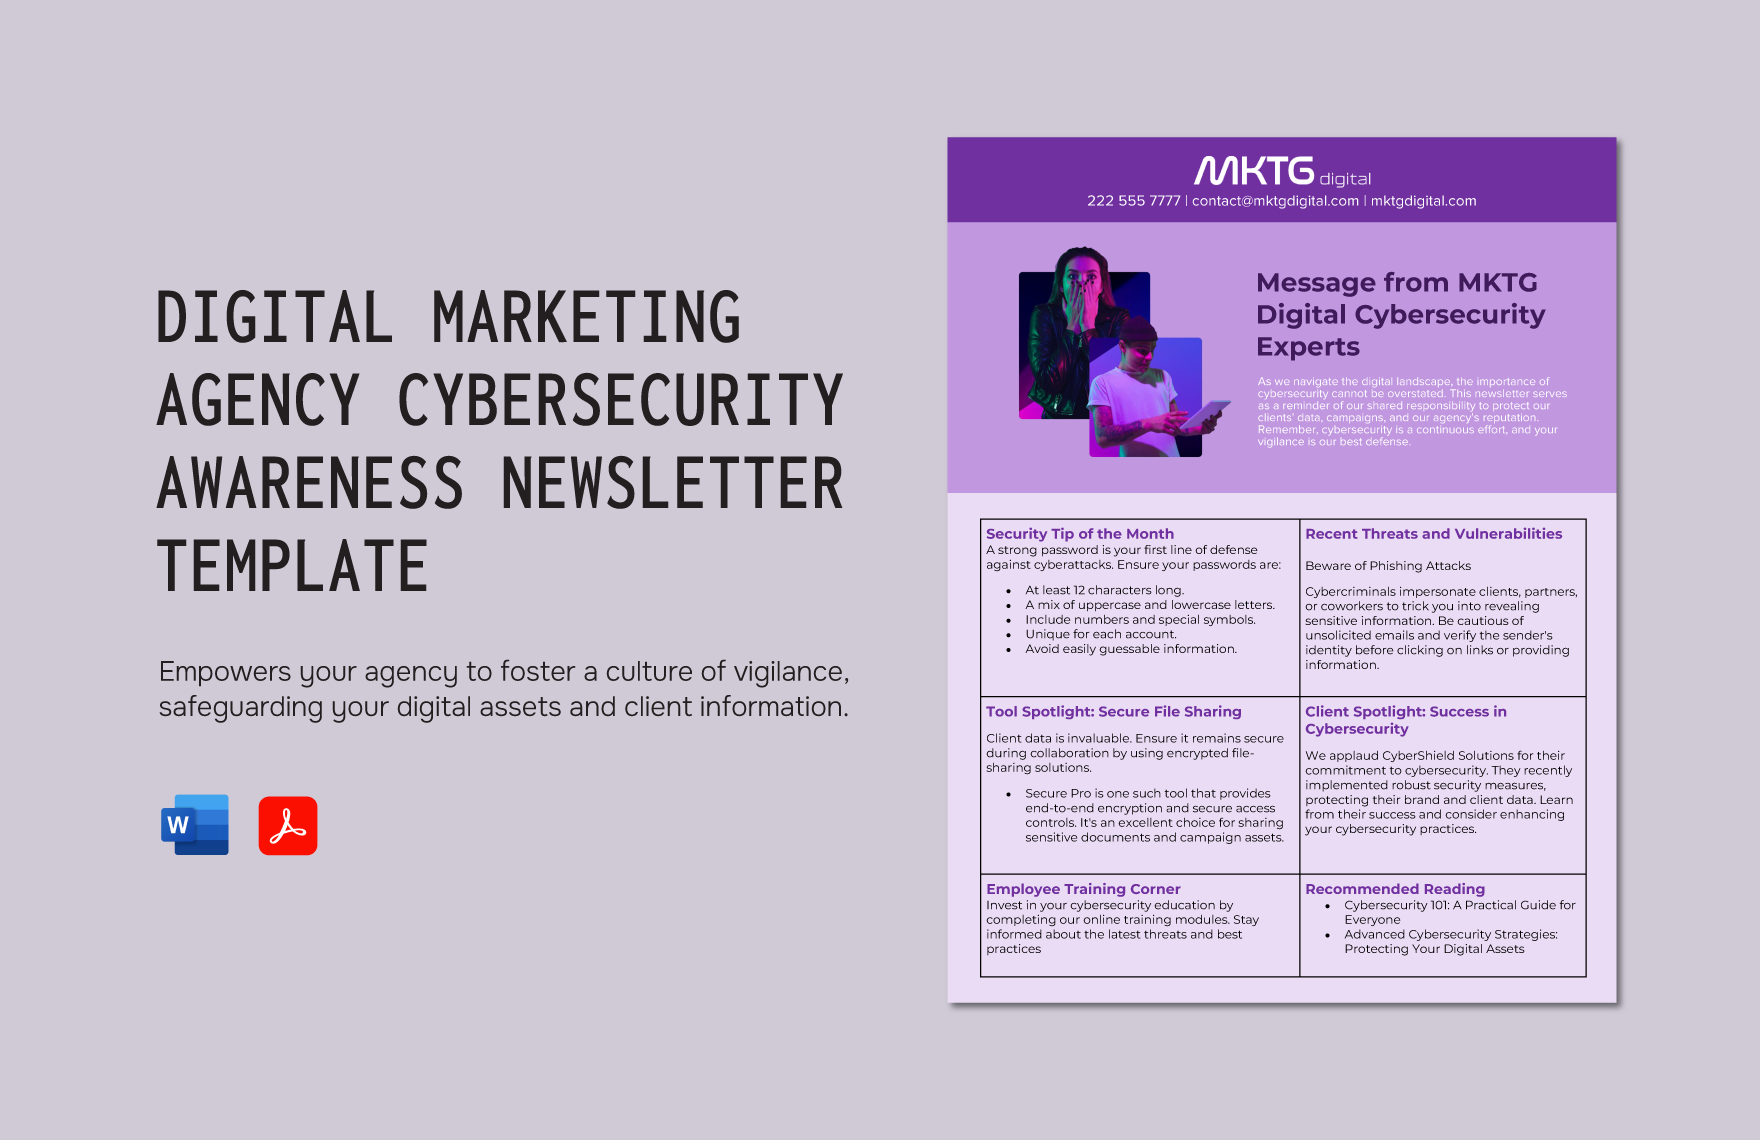 Digital Marketing Agency Cybersecurity Awareness Newsletter Template